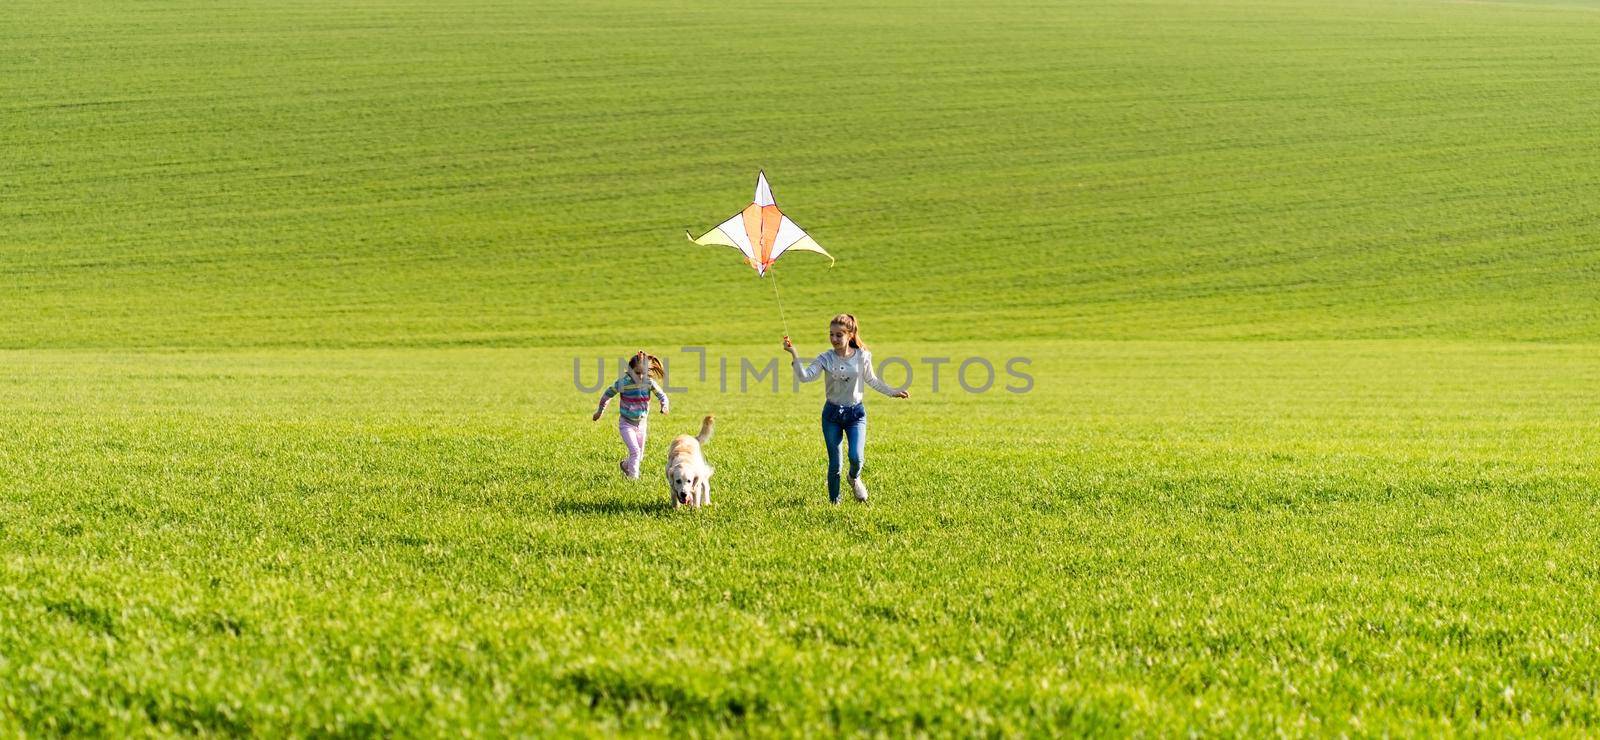 Children with kite by GekaSkr